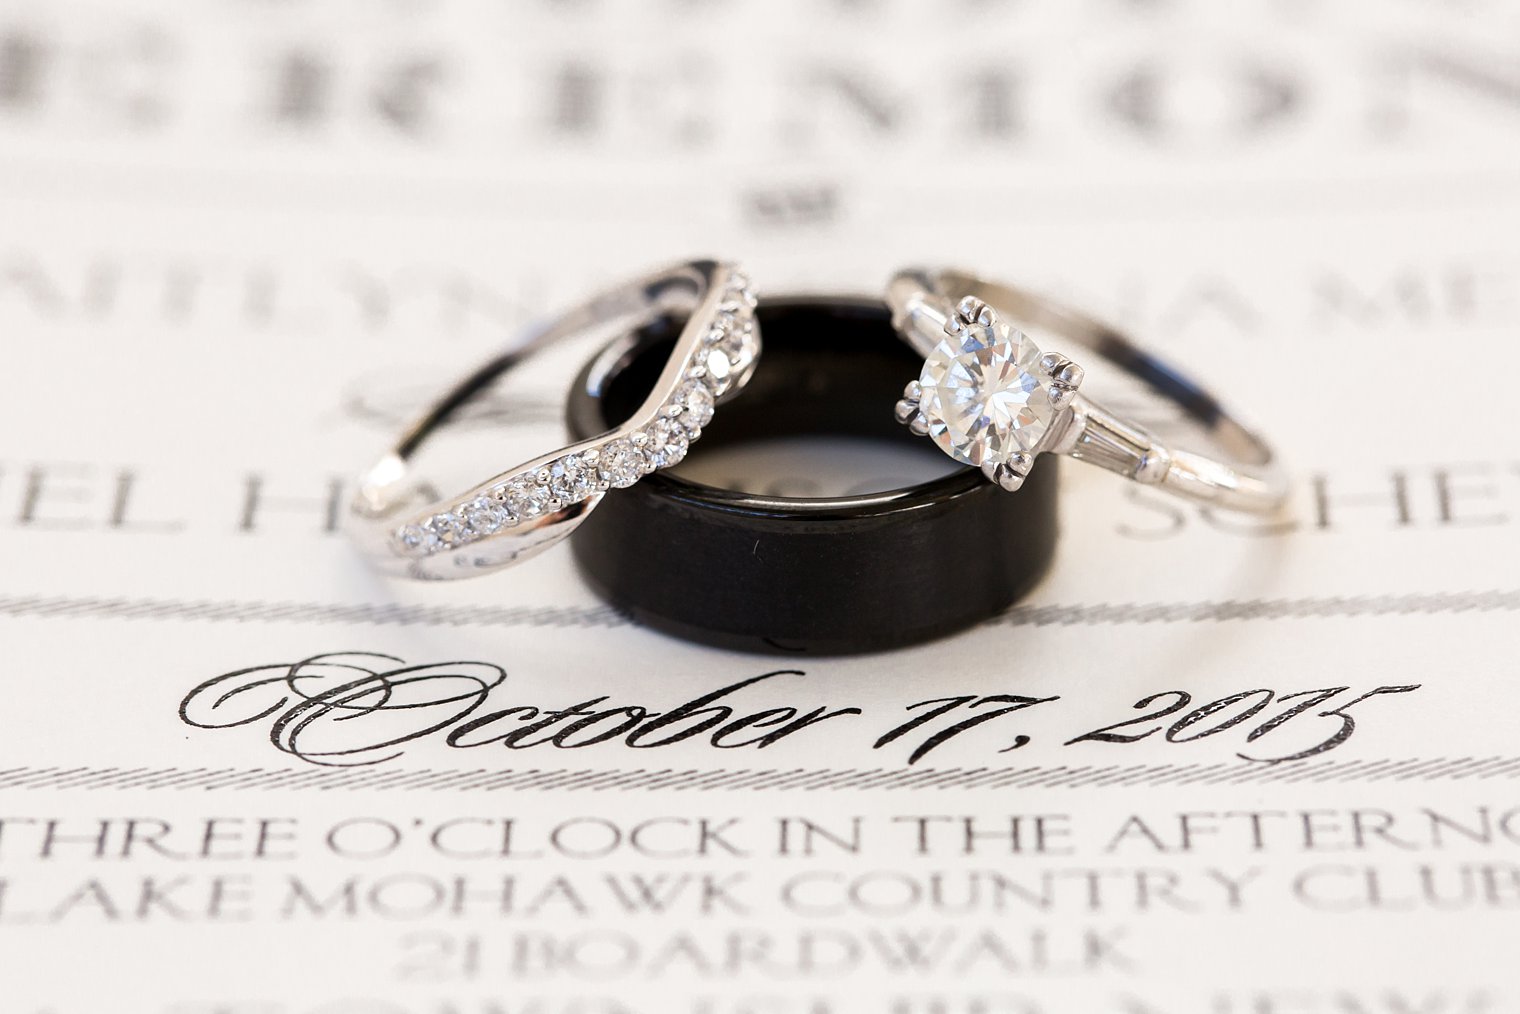 Lake Mohawk Country Club Wedding rings